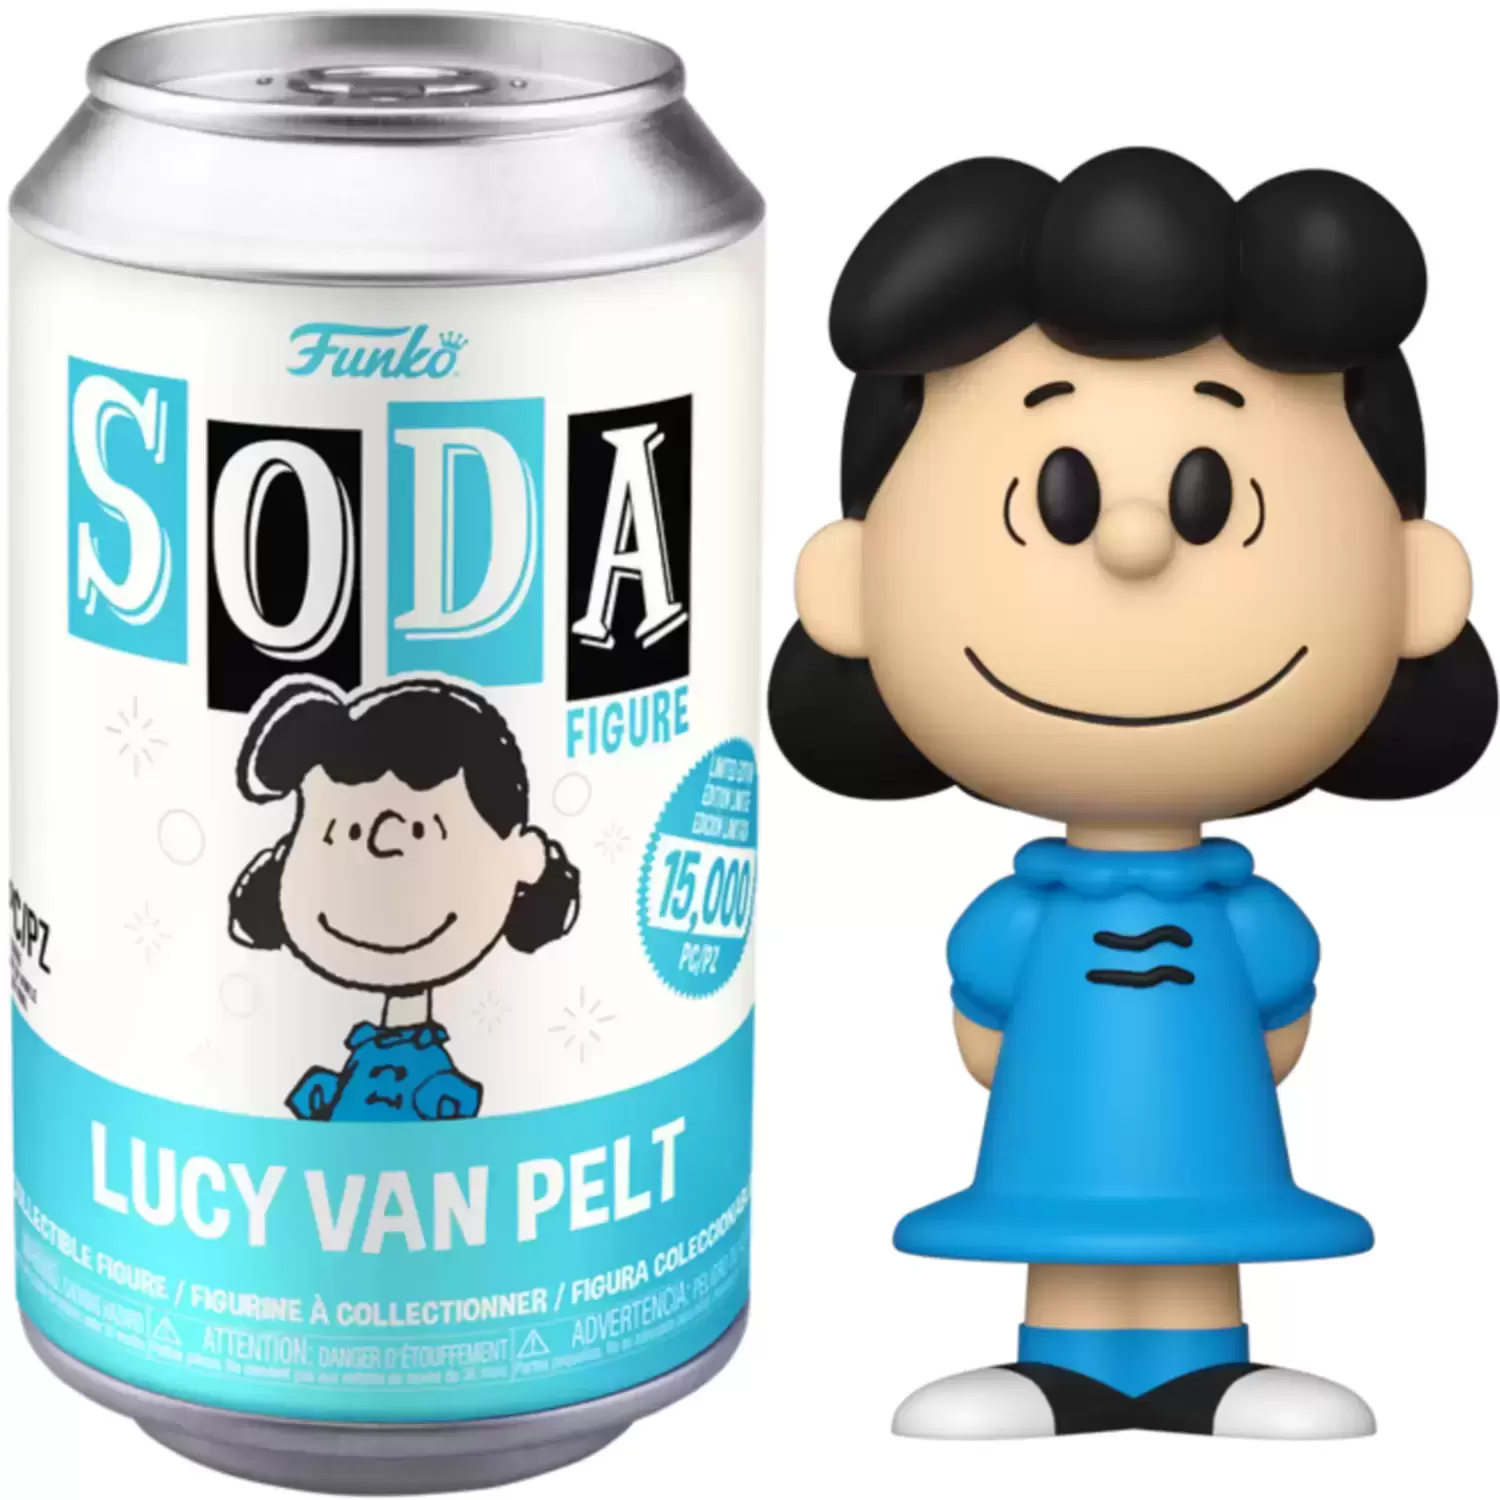 Vinyl Soda! - Peanuts - Lucy Van Pelt